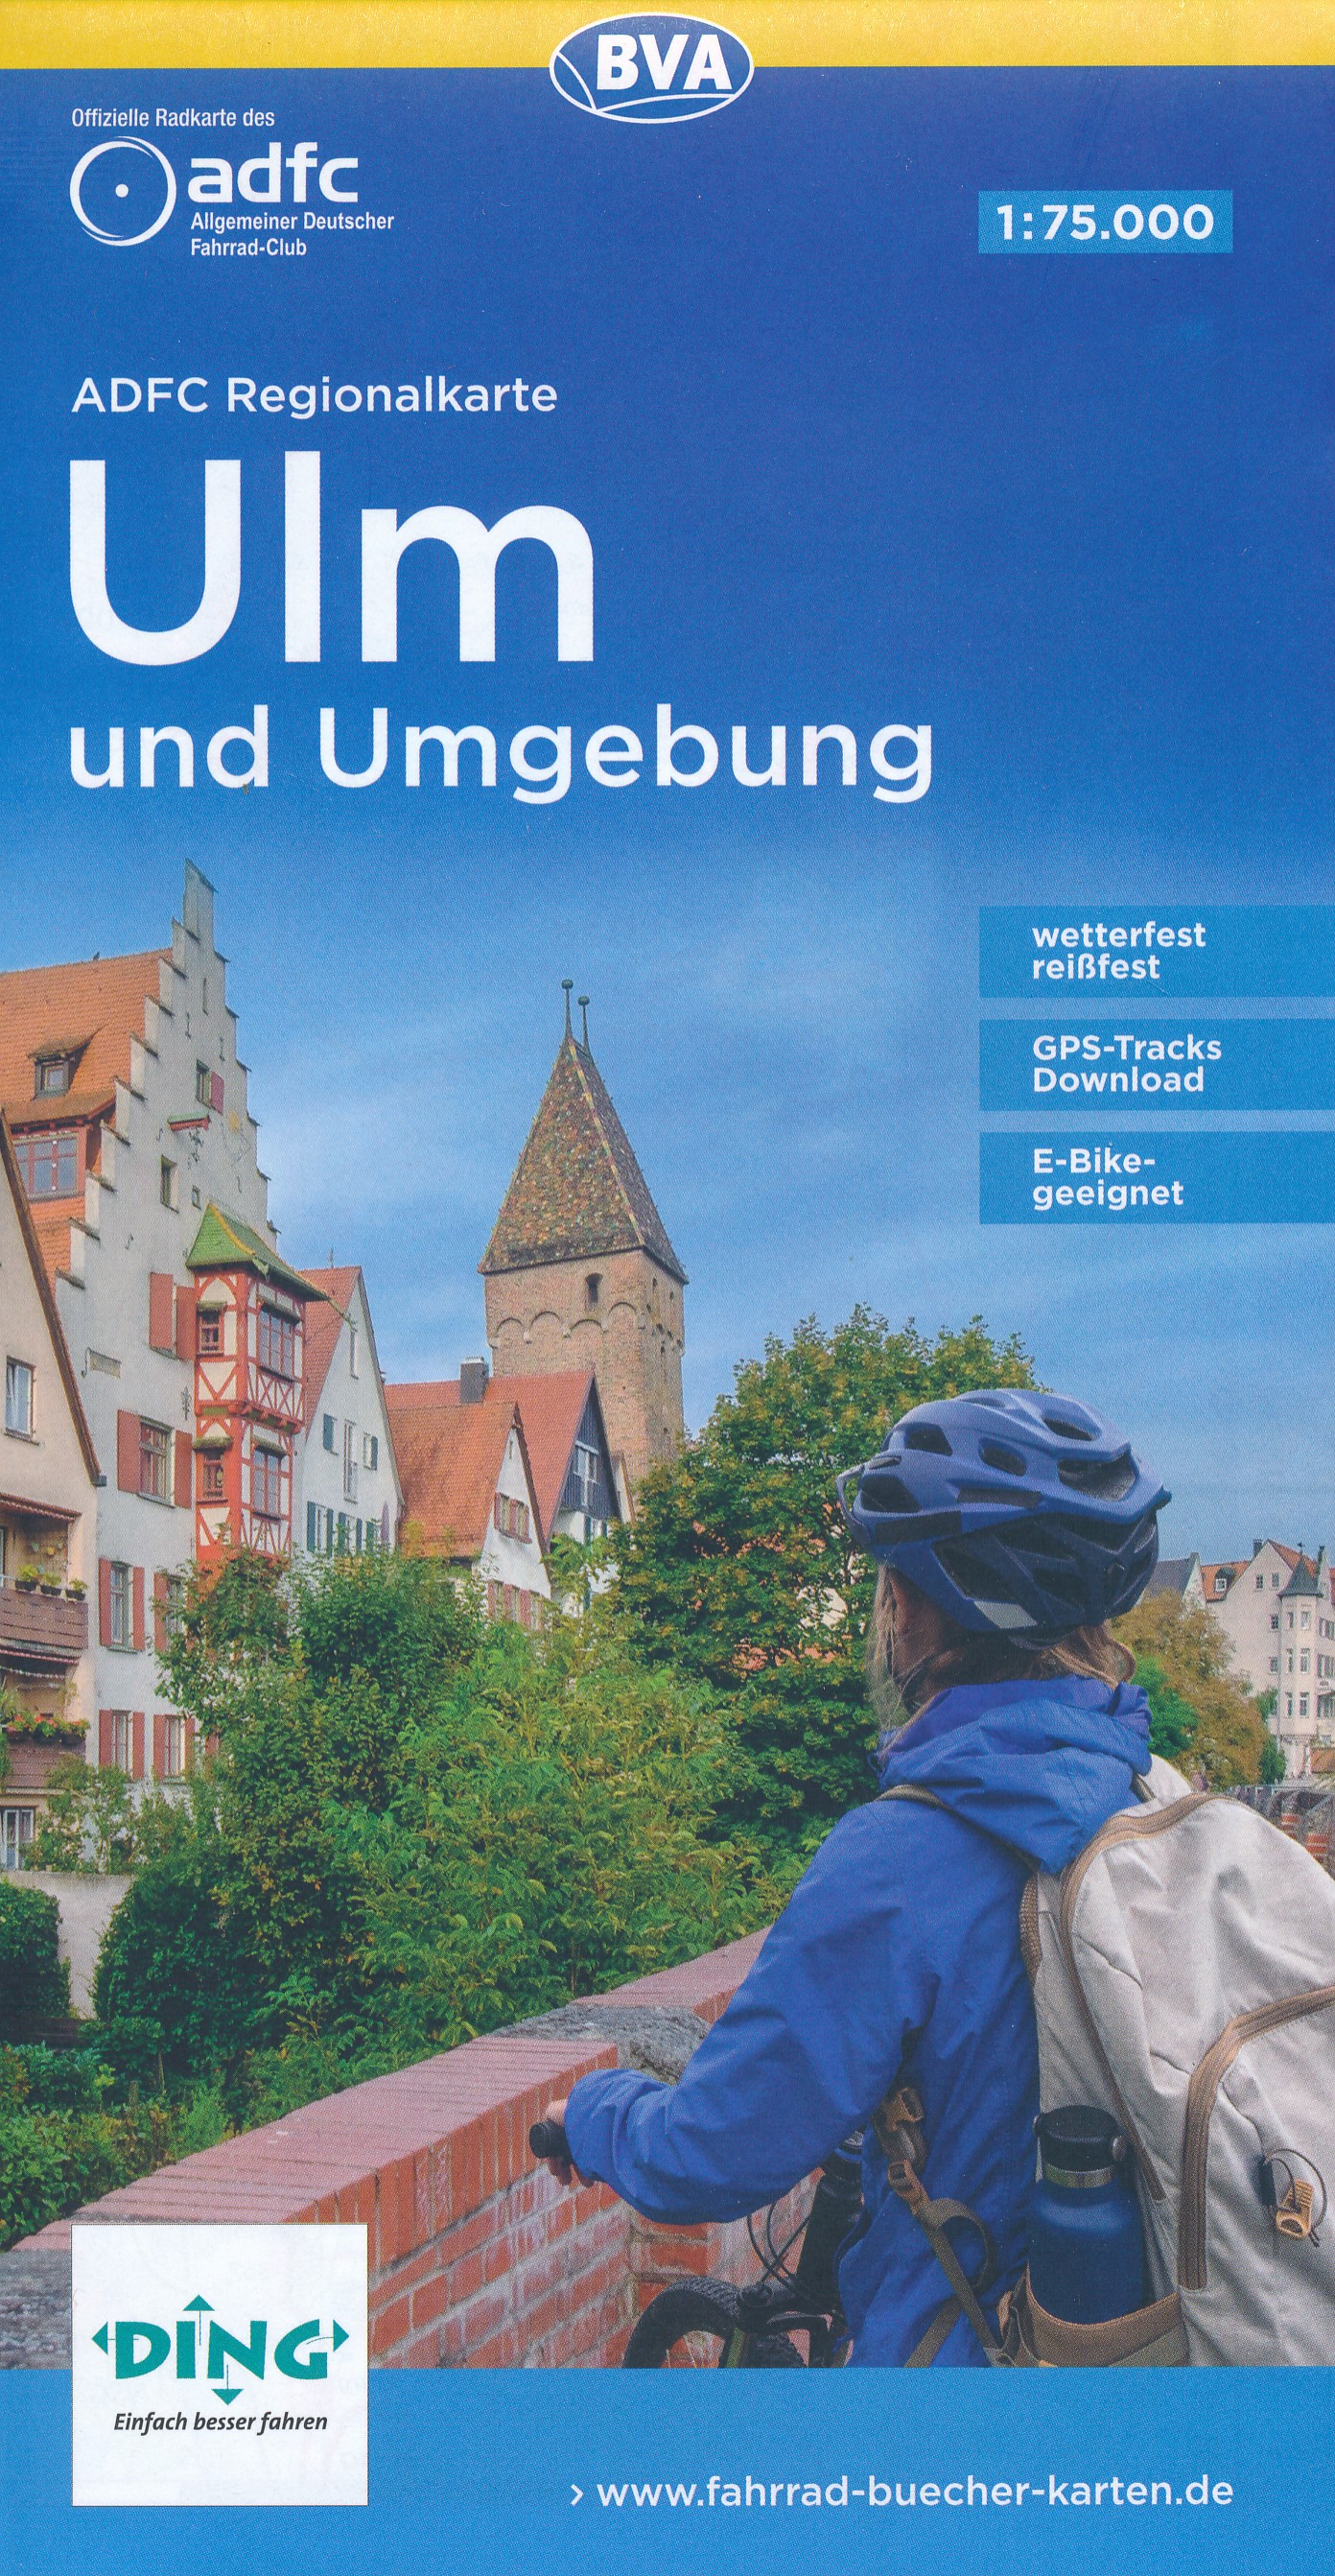 Fietskaart ADFC Regionalkarte Ulm und Umgebung | BVA BikeMedia de zwerver